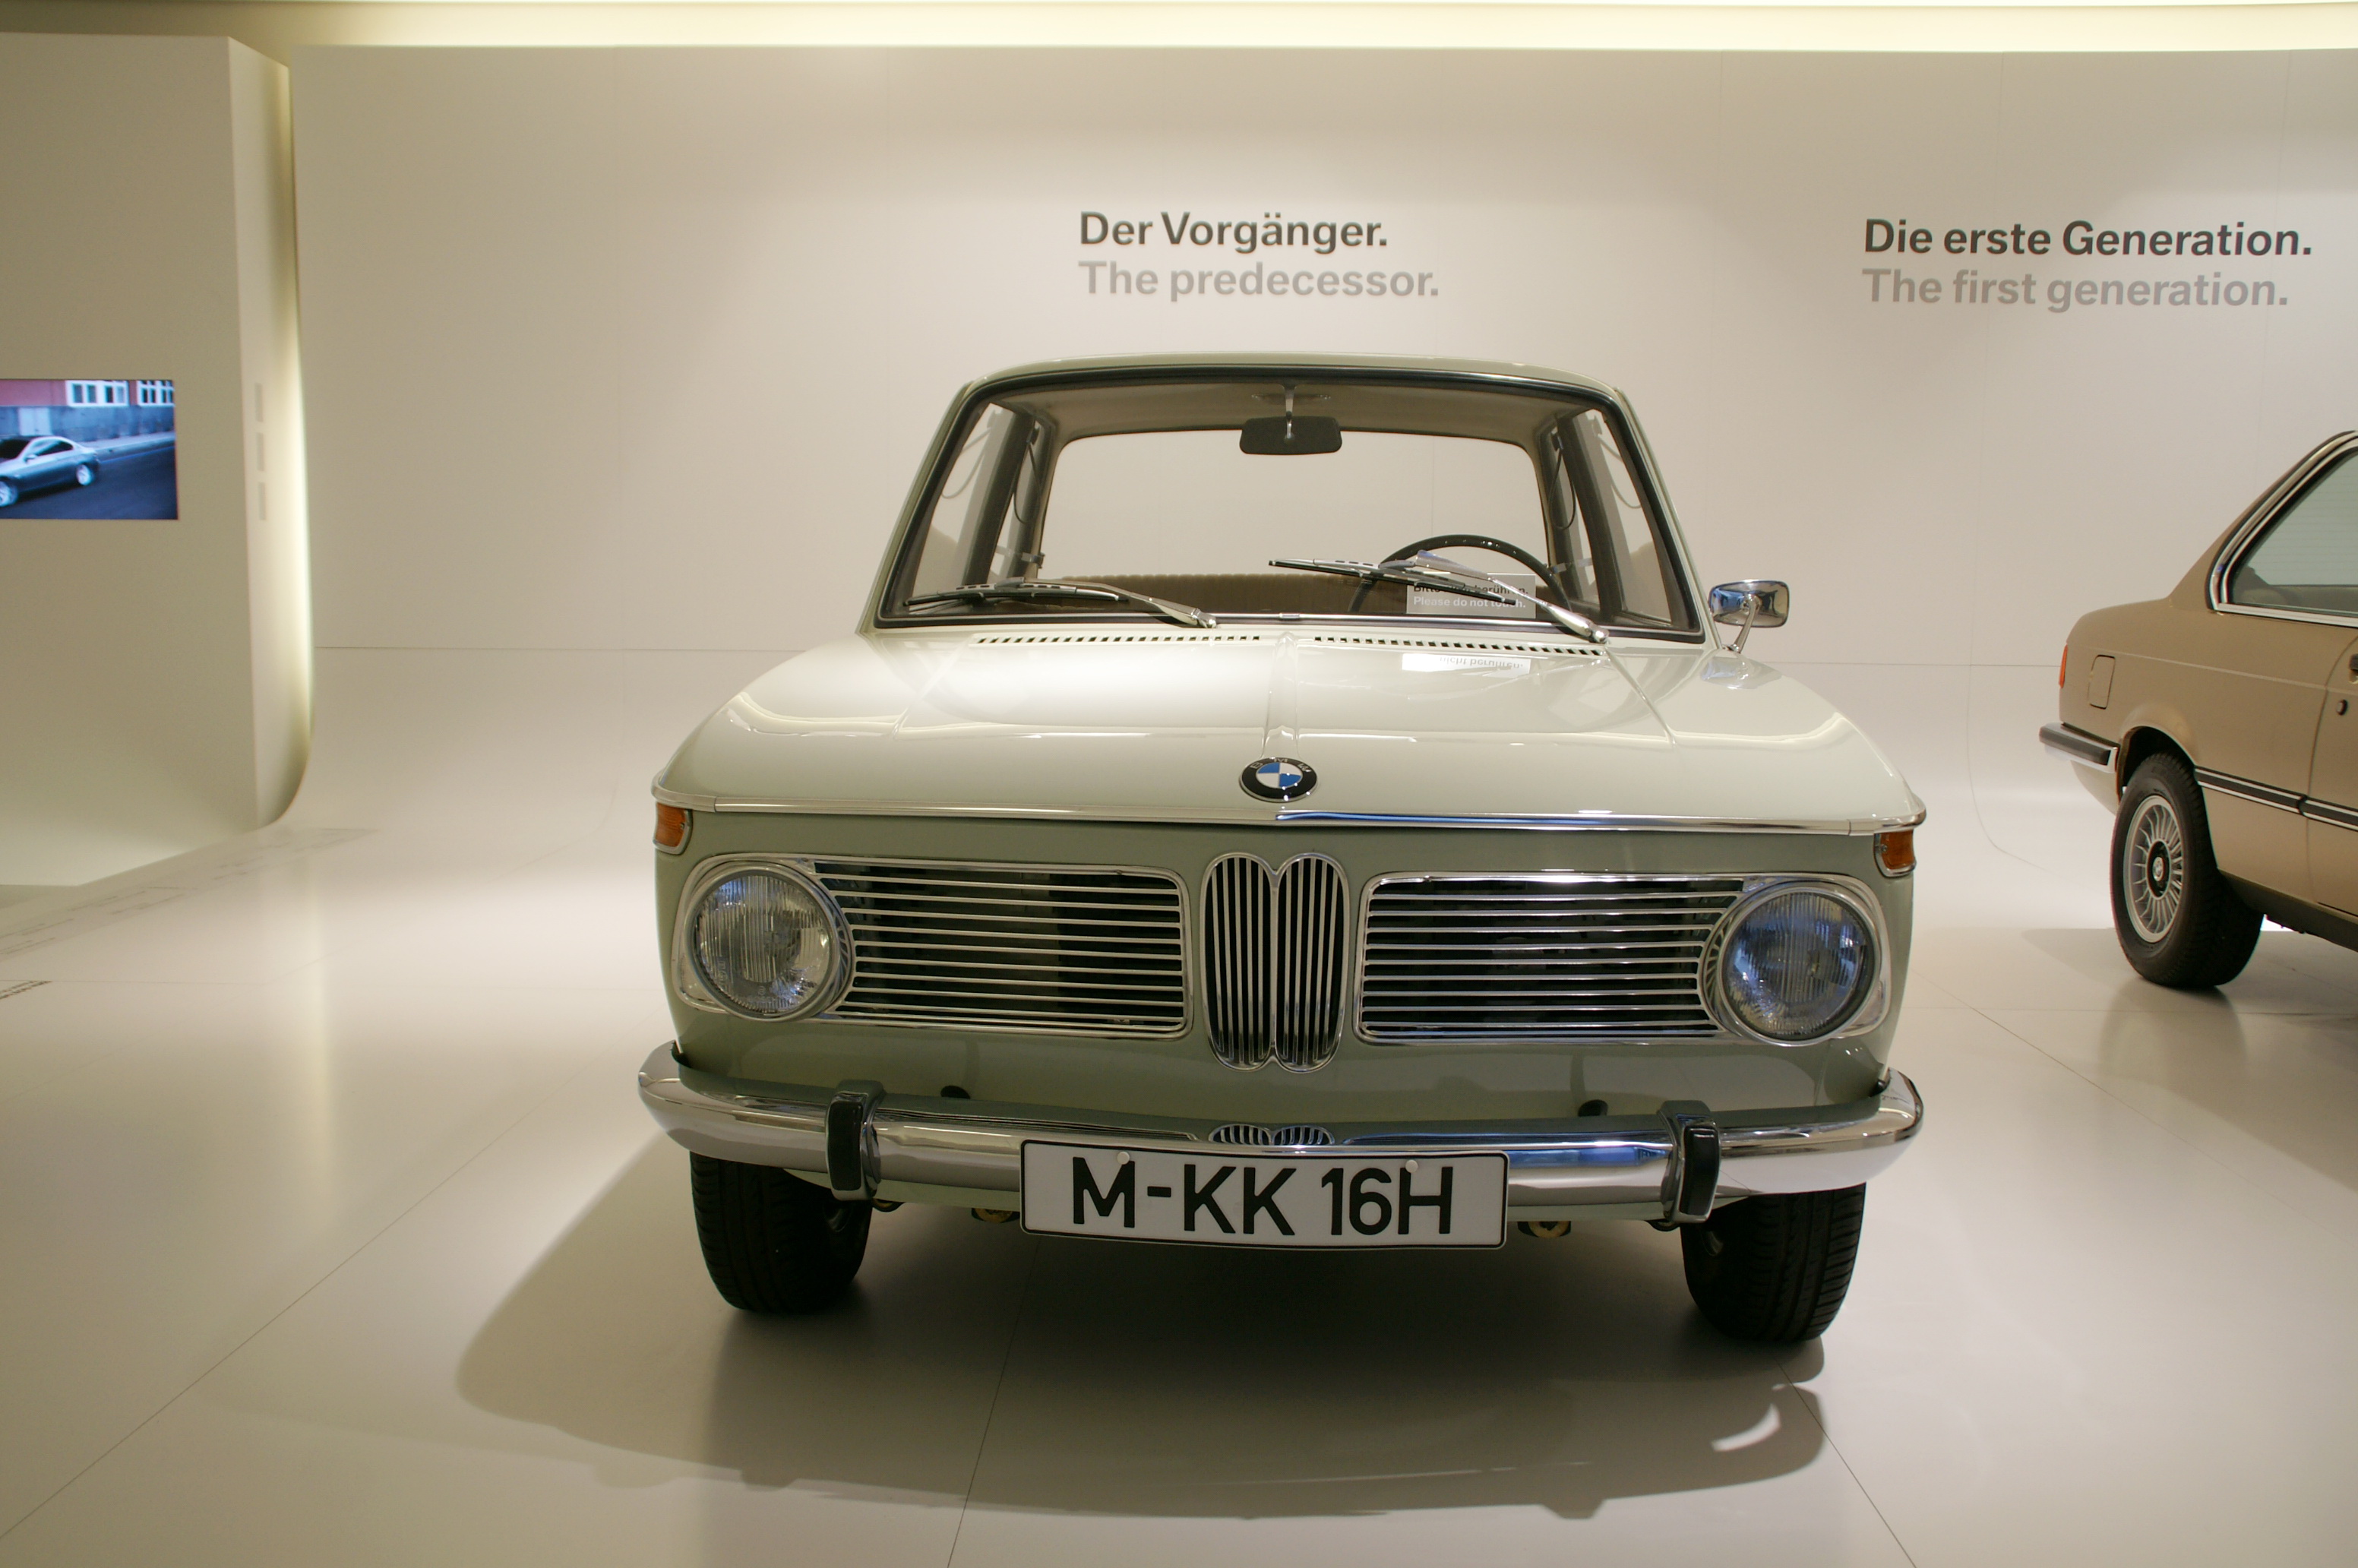 BMW 1600-2 23.10.2012 2051 | Flickr - Photo Sharing!